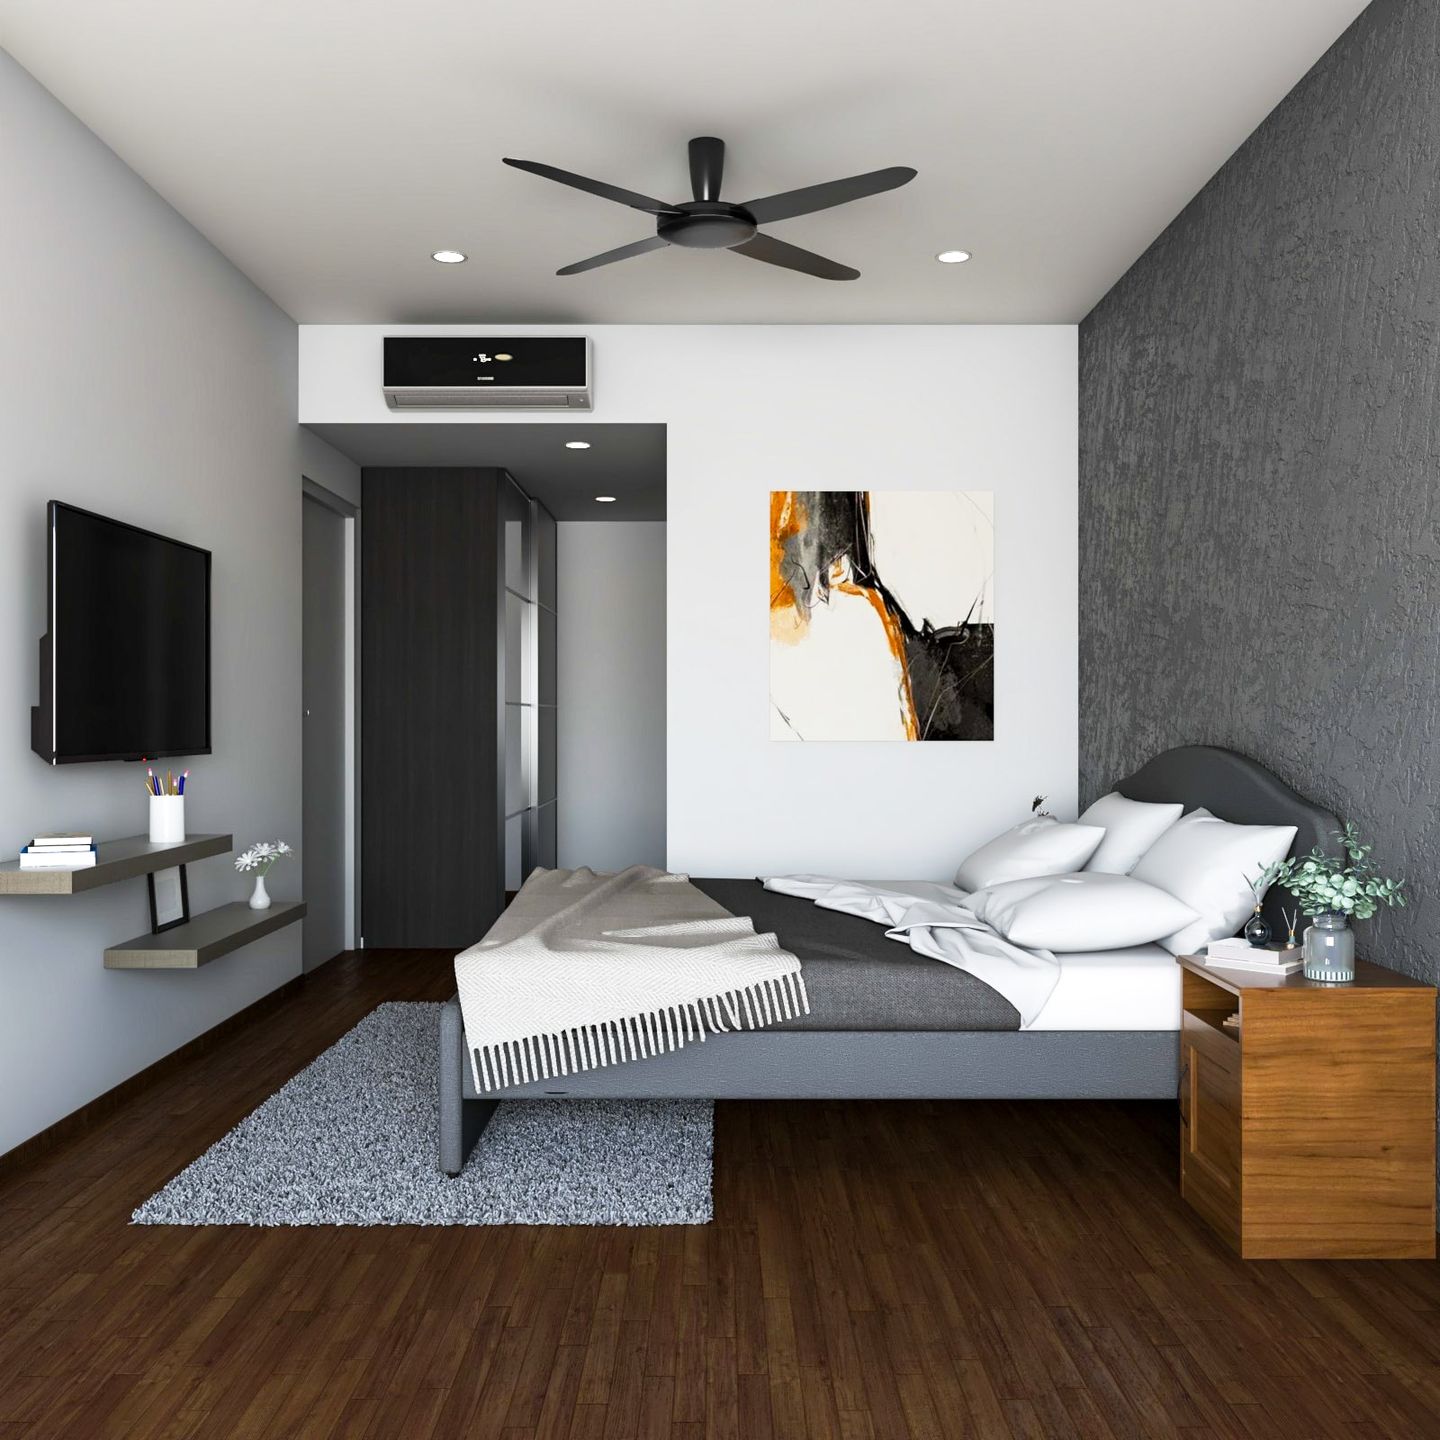 Master Bedroom With Warm Colour Scheme - Livspace